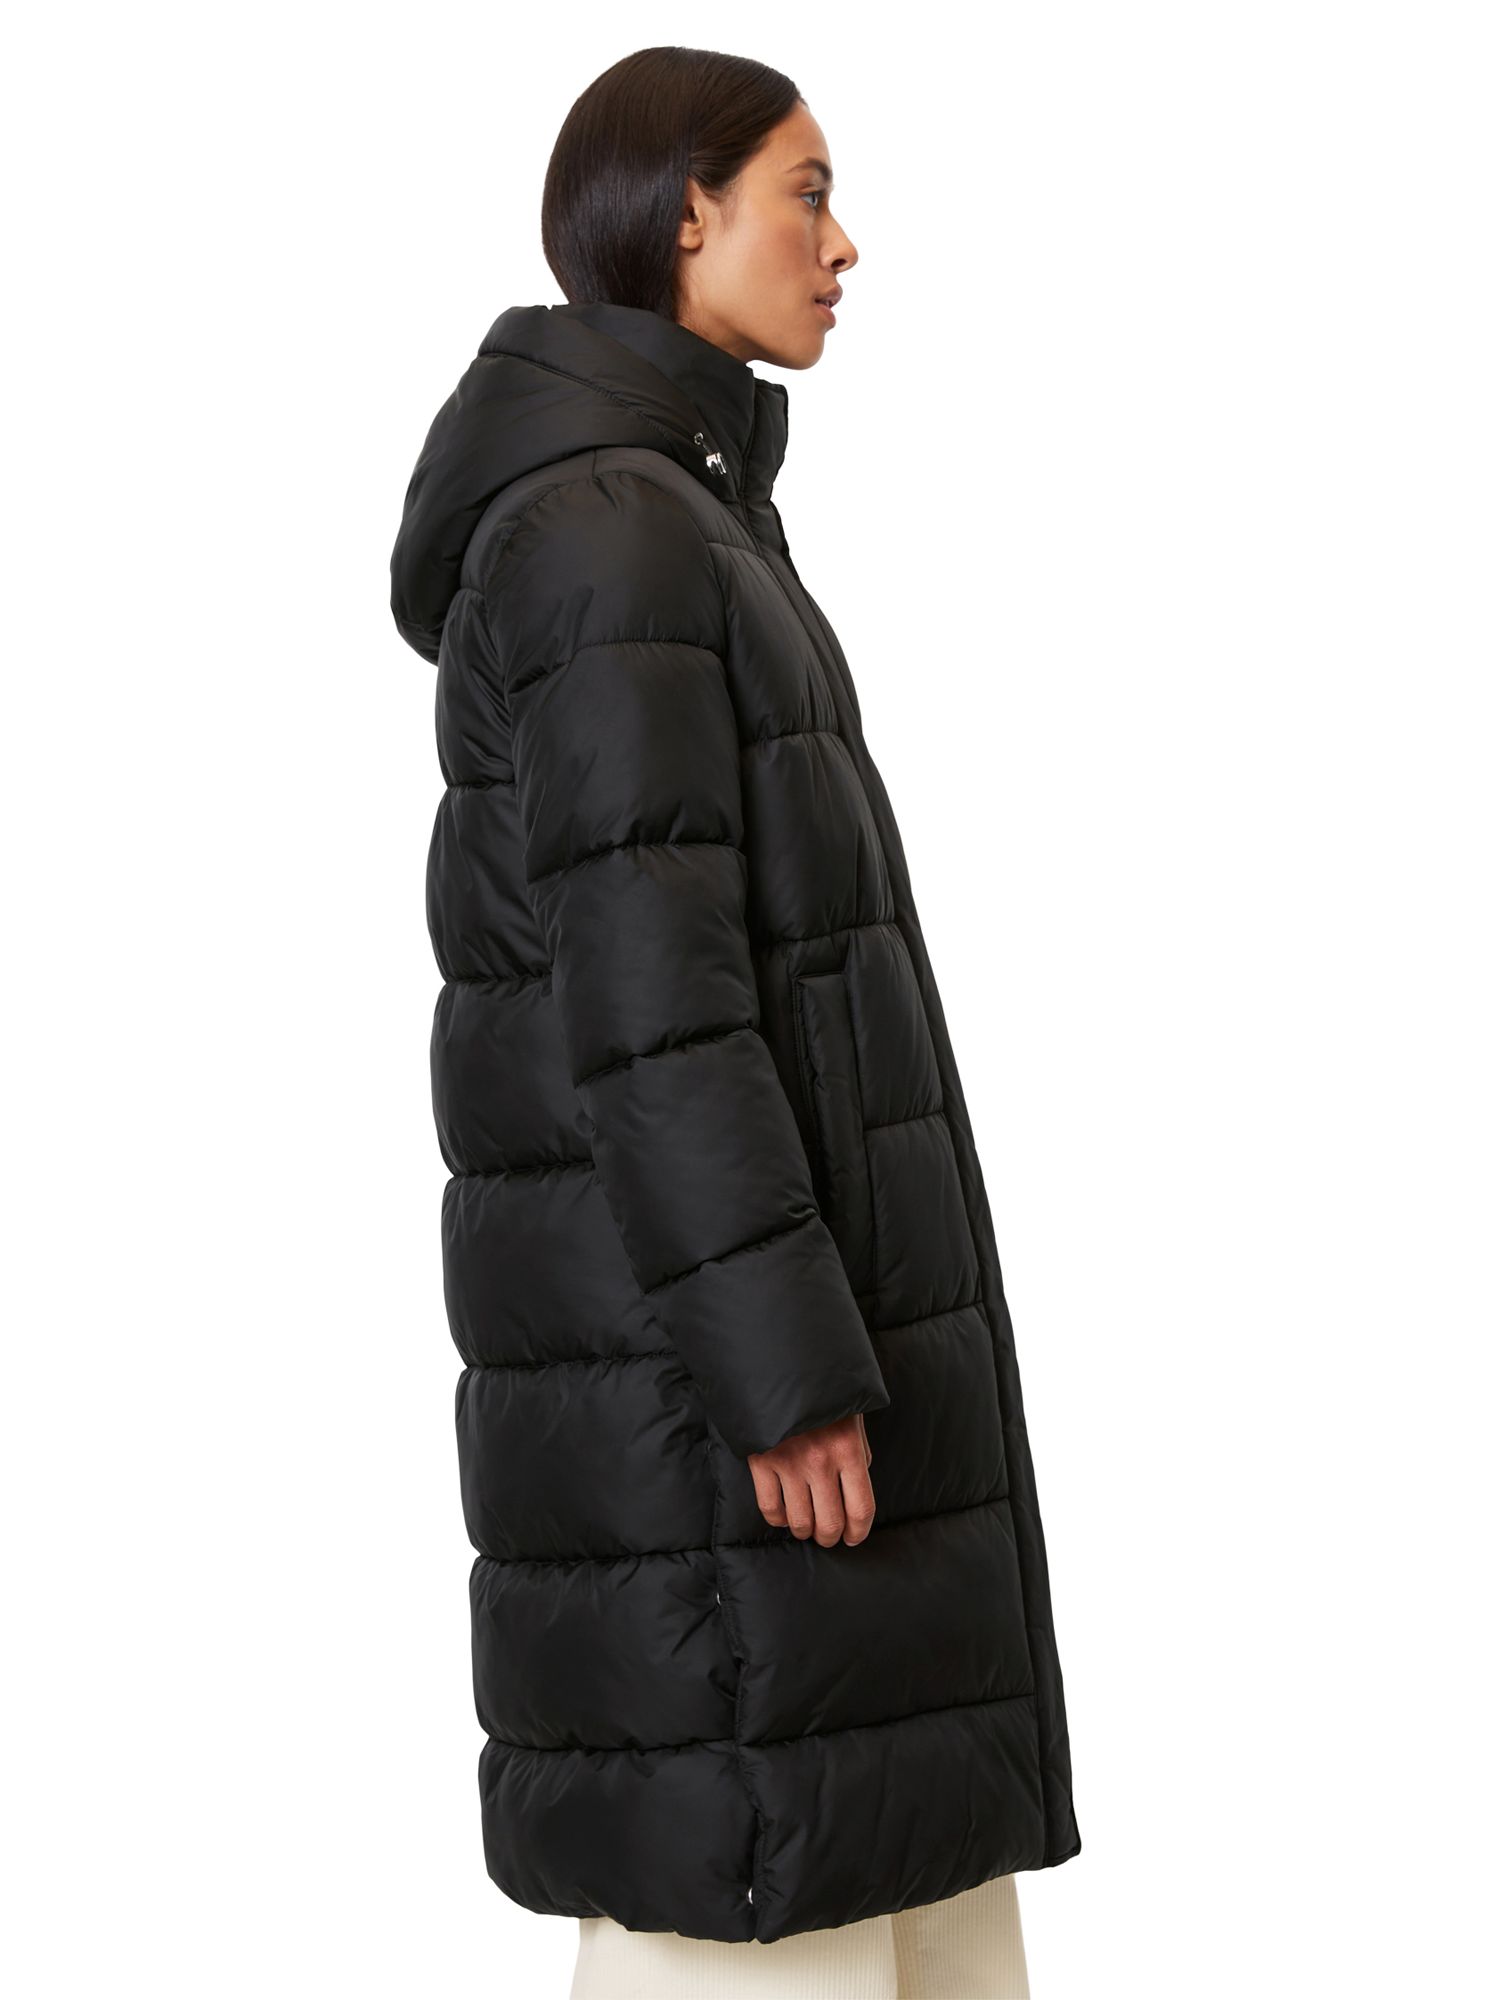 Marc O'Polo Padded Hooded Coat, Black at John Lewis & Partners